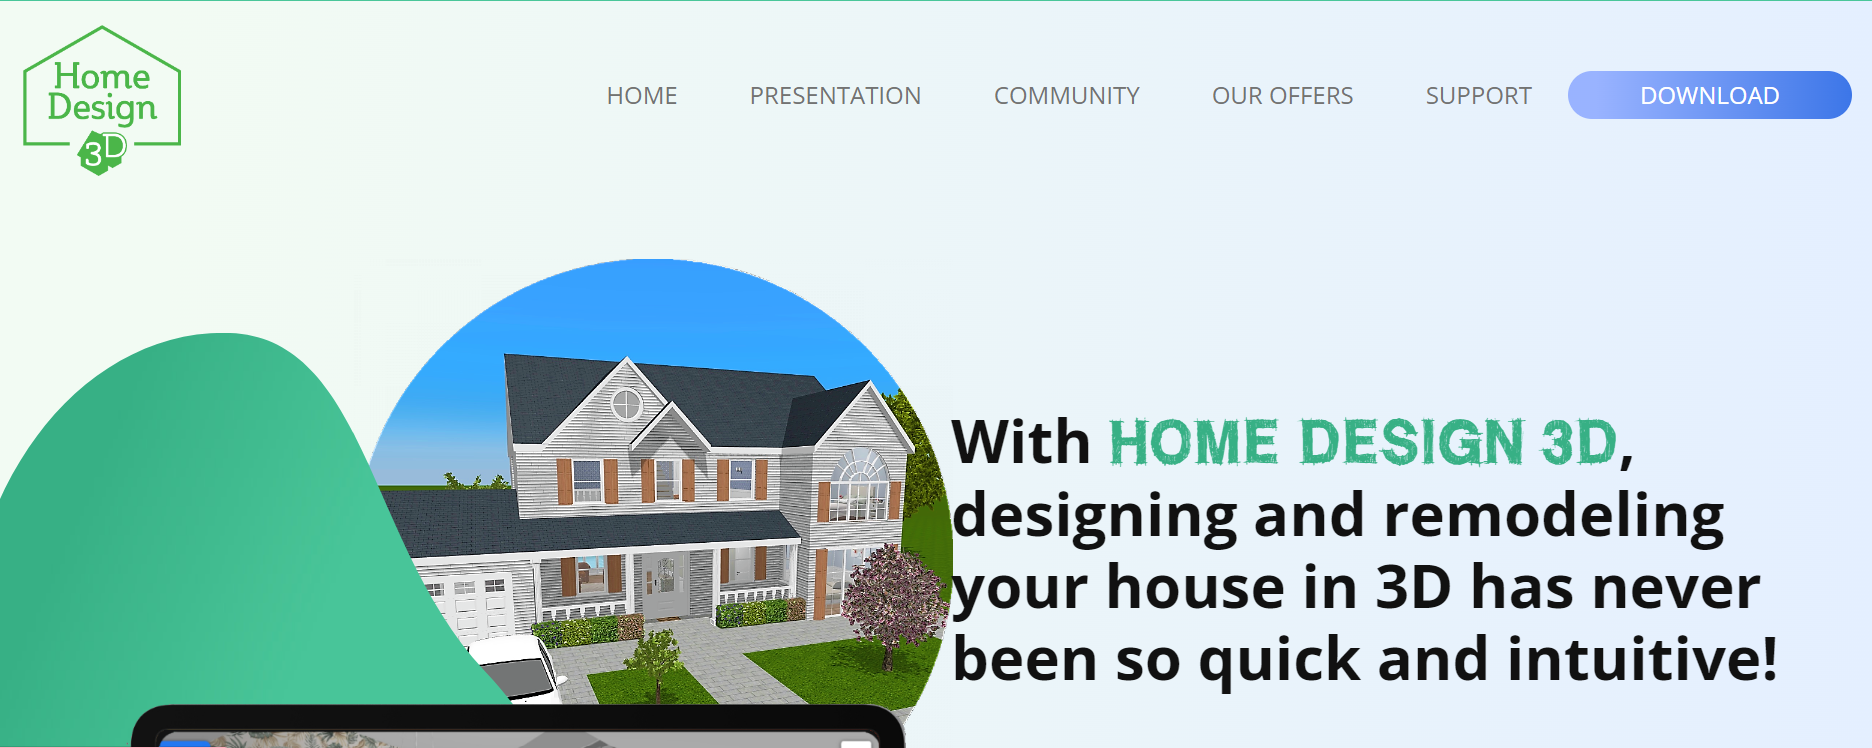 Home design 3D interior design app